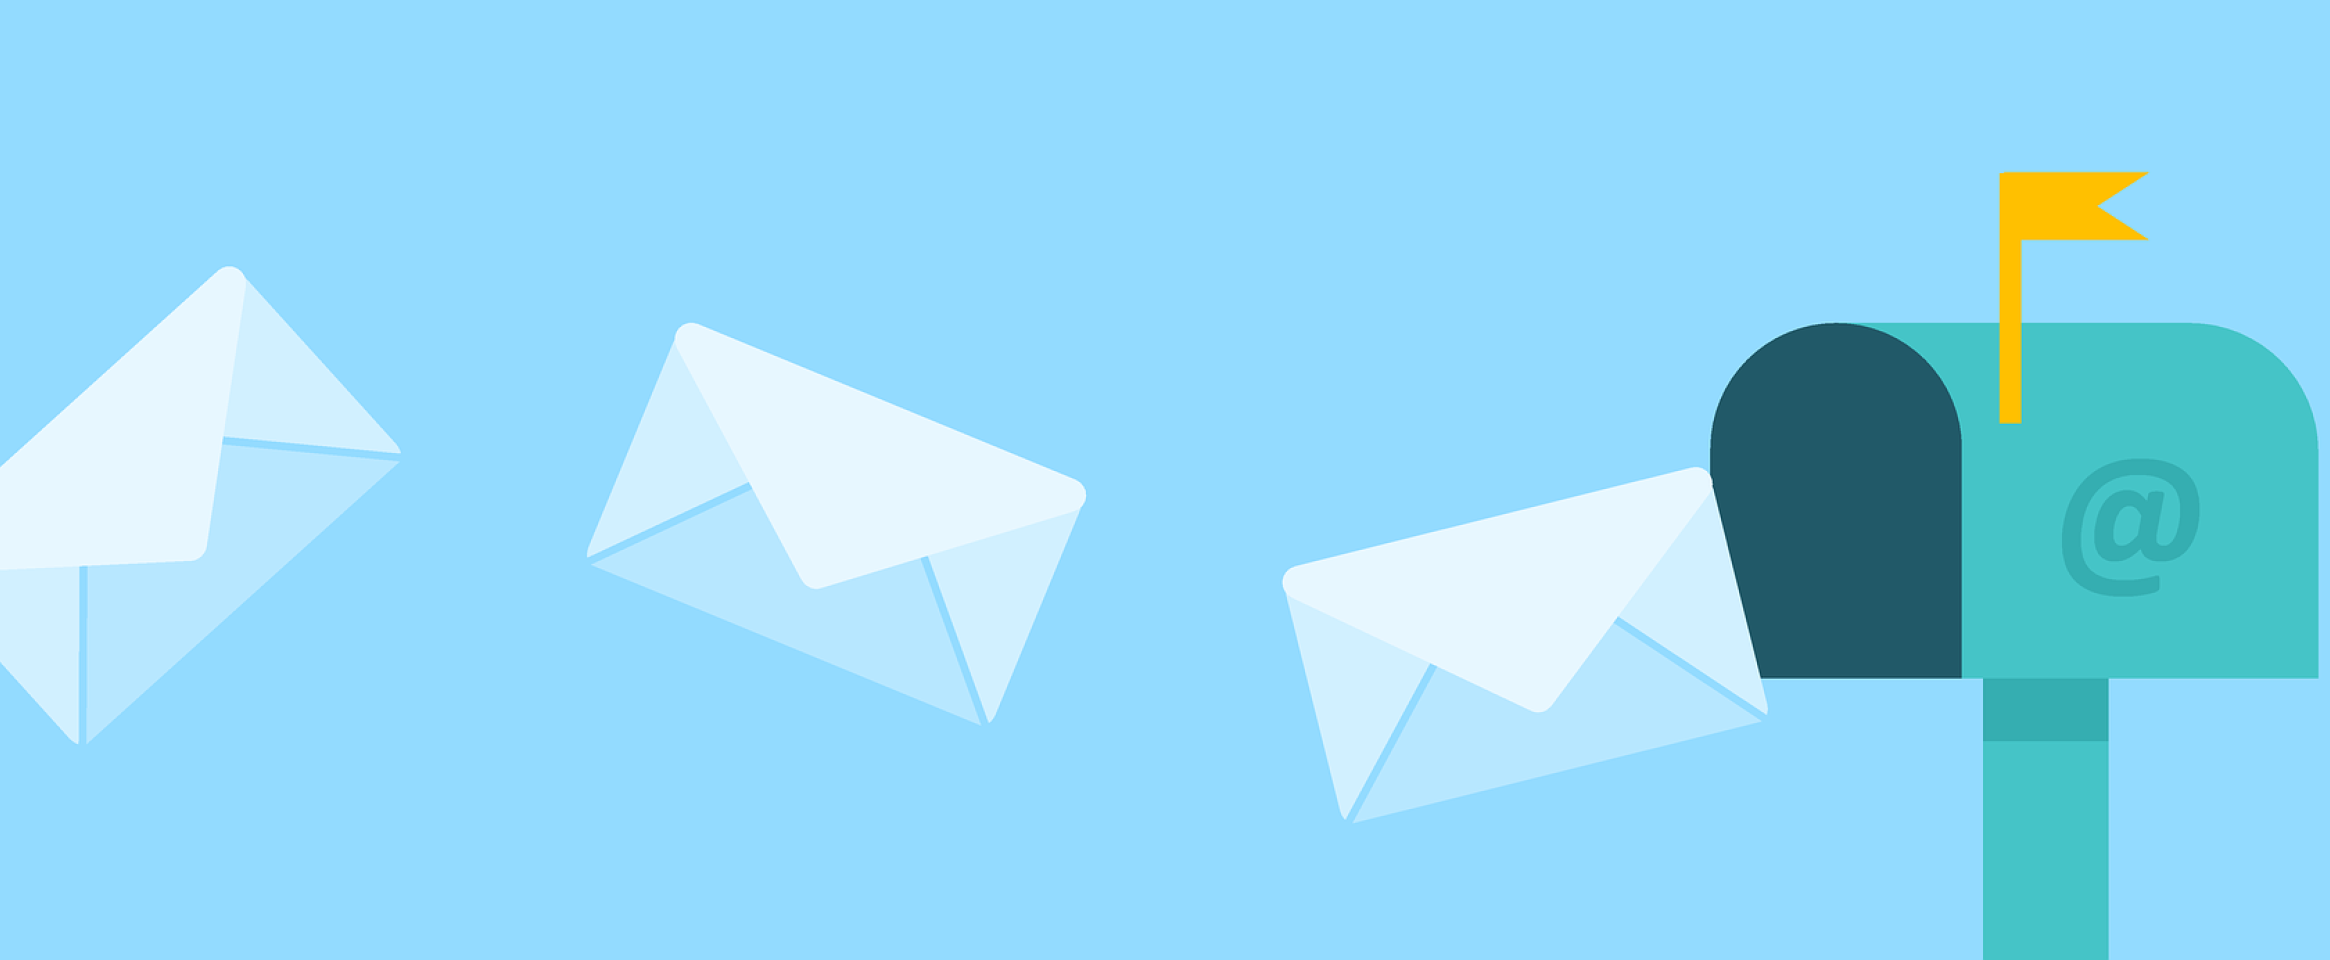 Stock illustration of envelopes floating towards an open mailbox